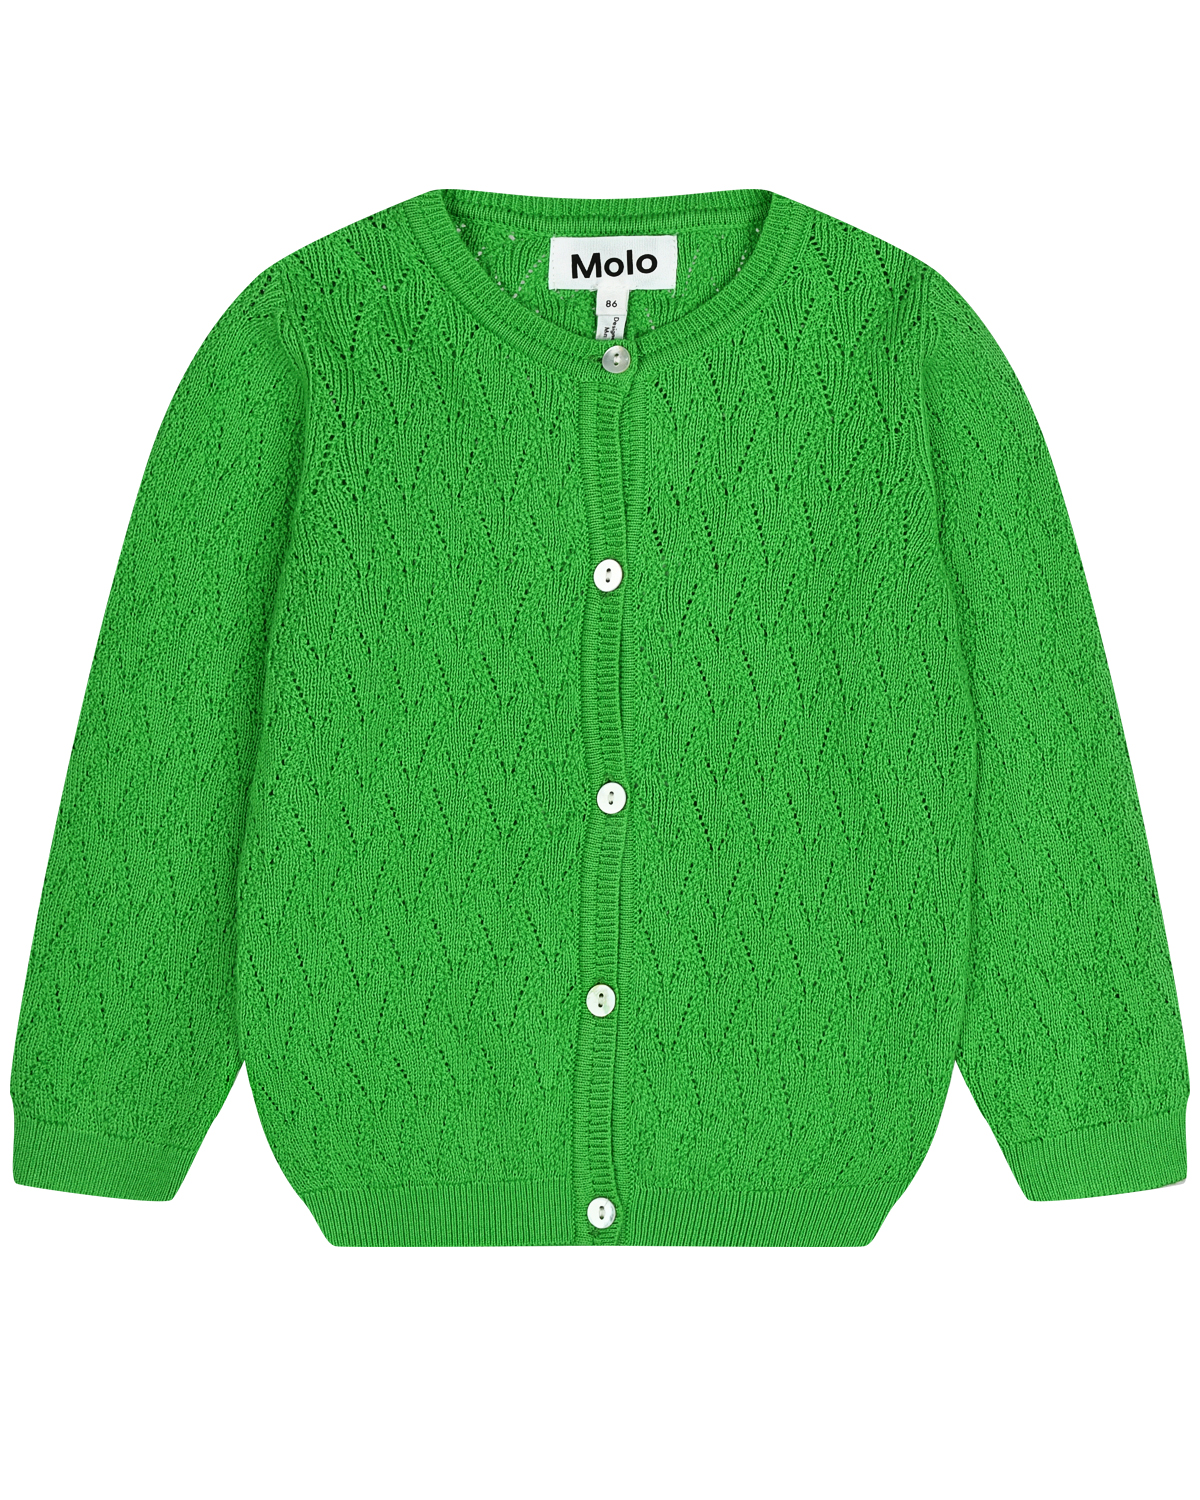 Кардиган Gilli Classic green Molo, размер 98, цвет нет цвета - фото 1